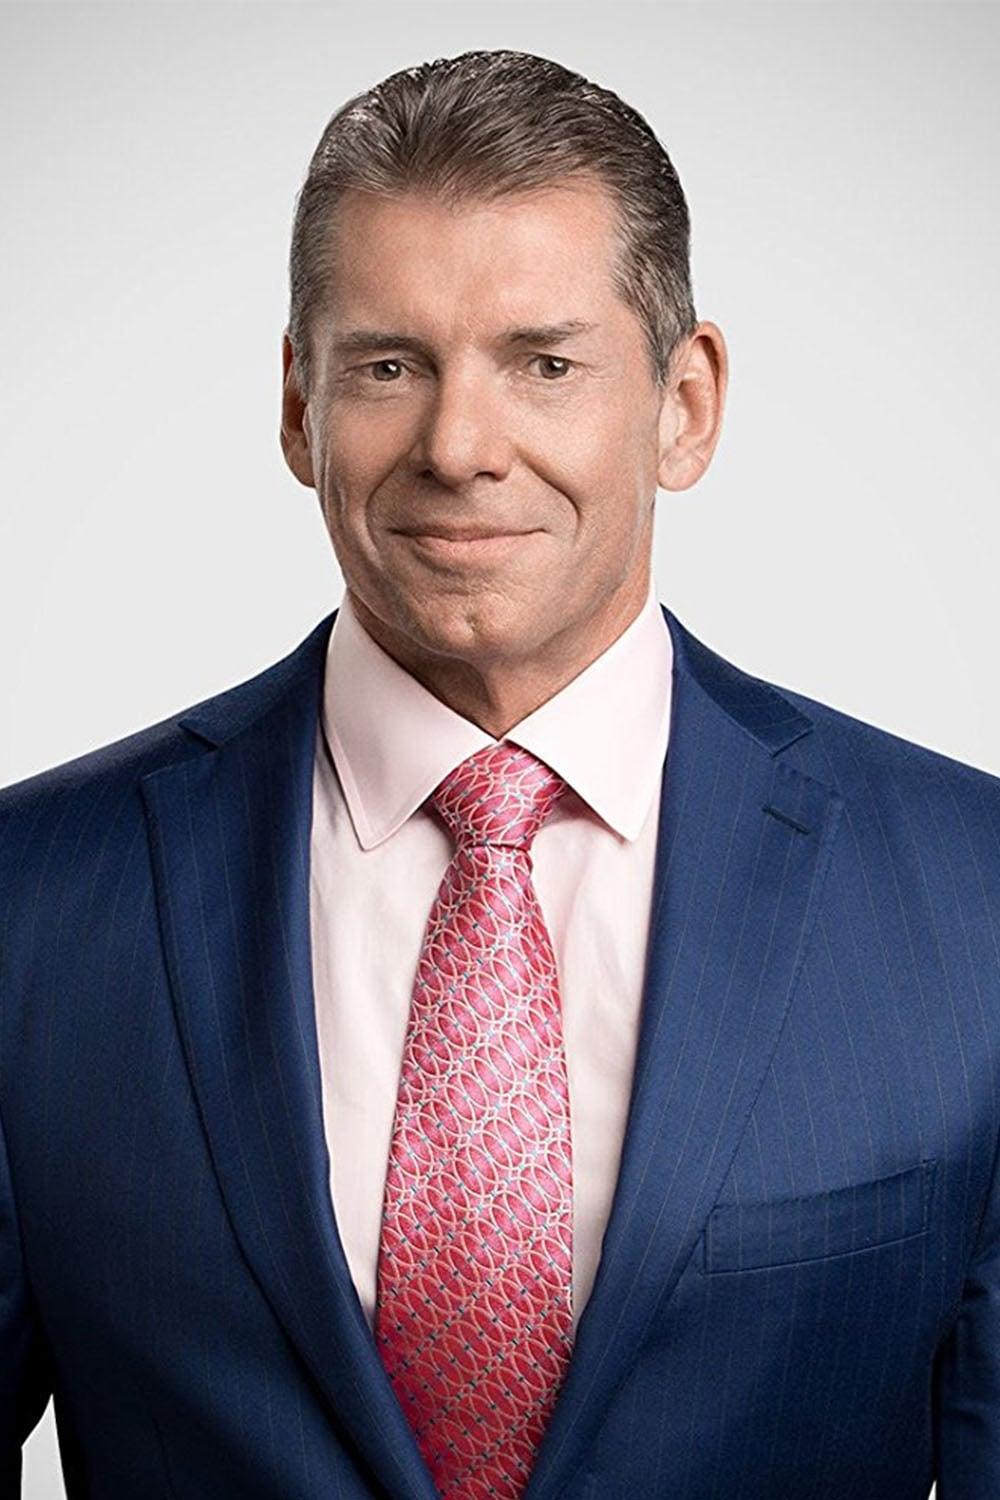 Vince McMahon | Producer